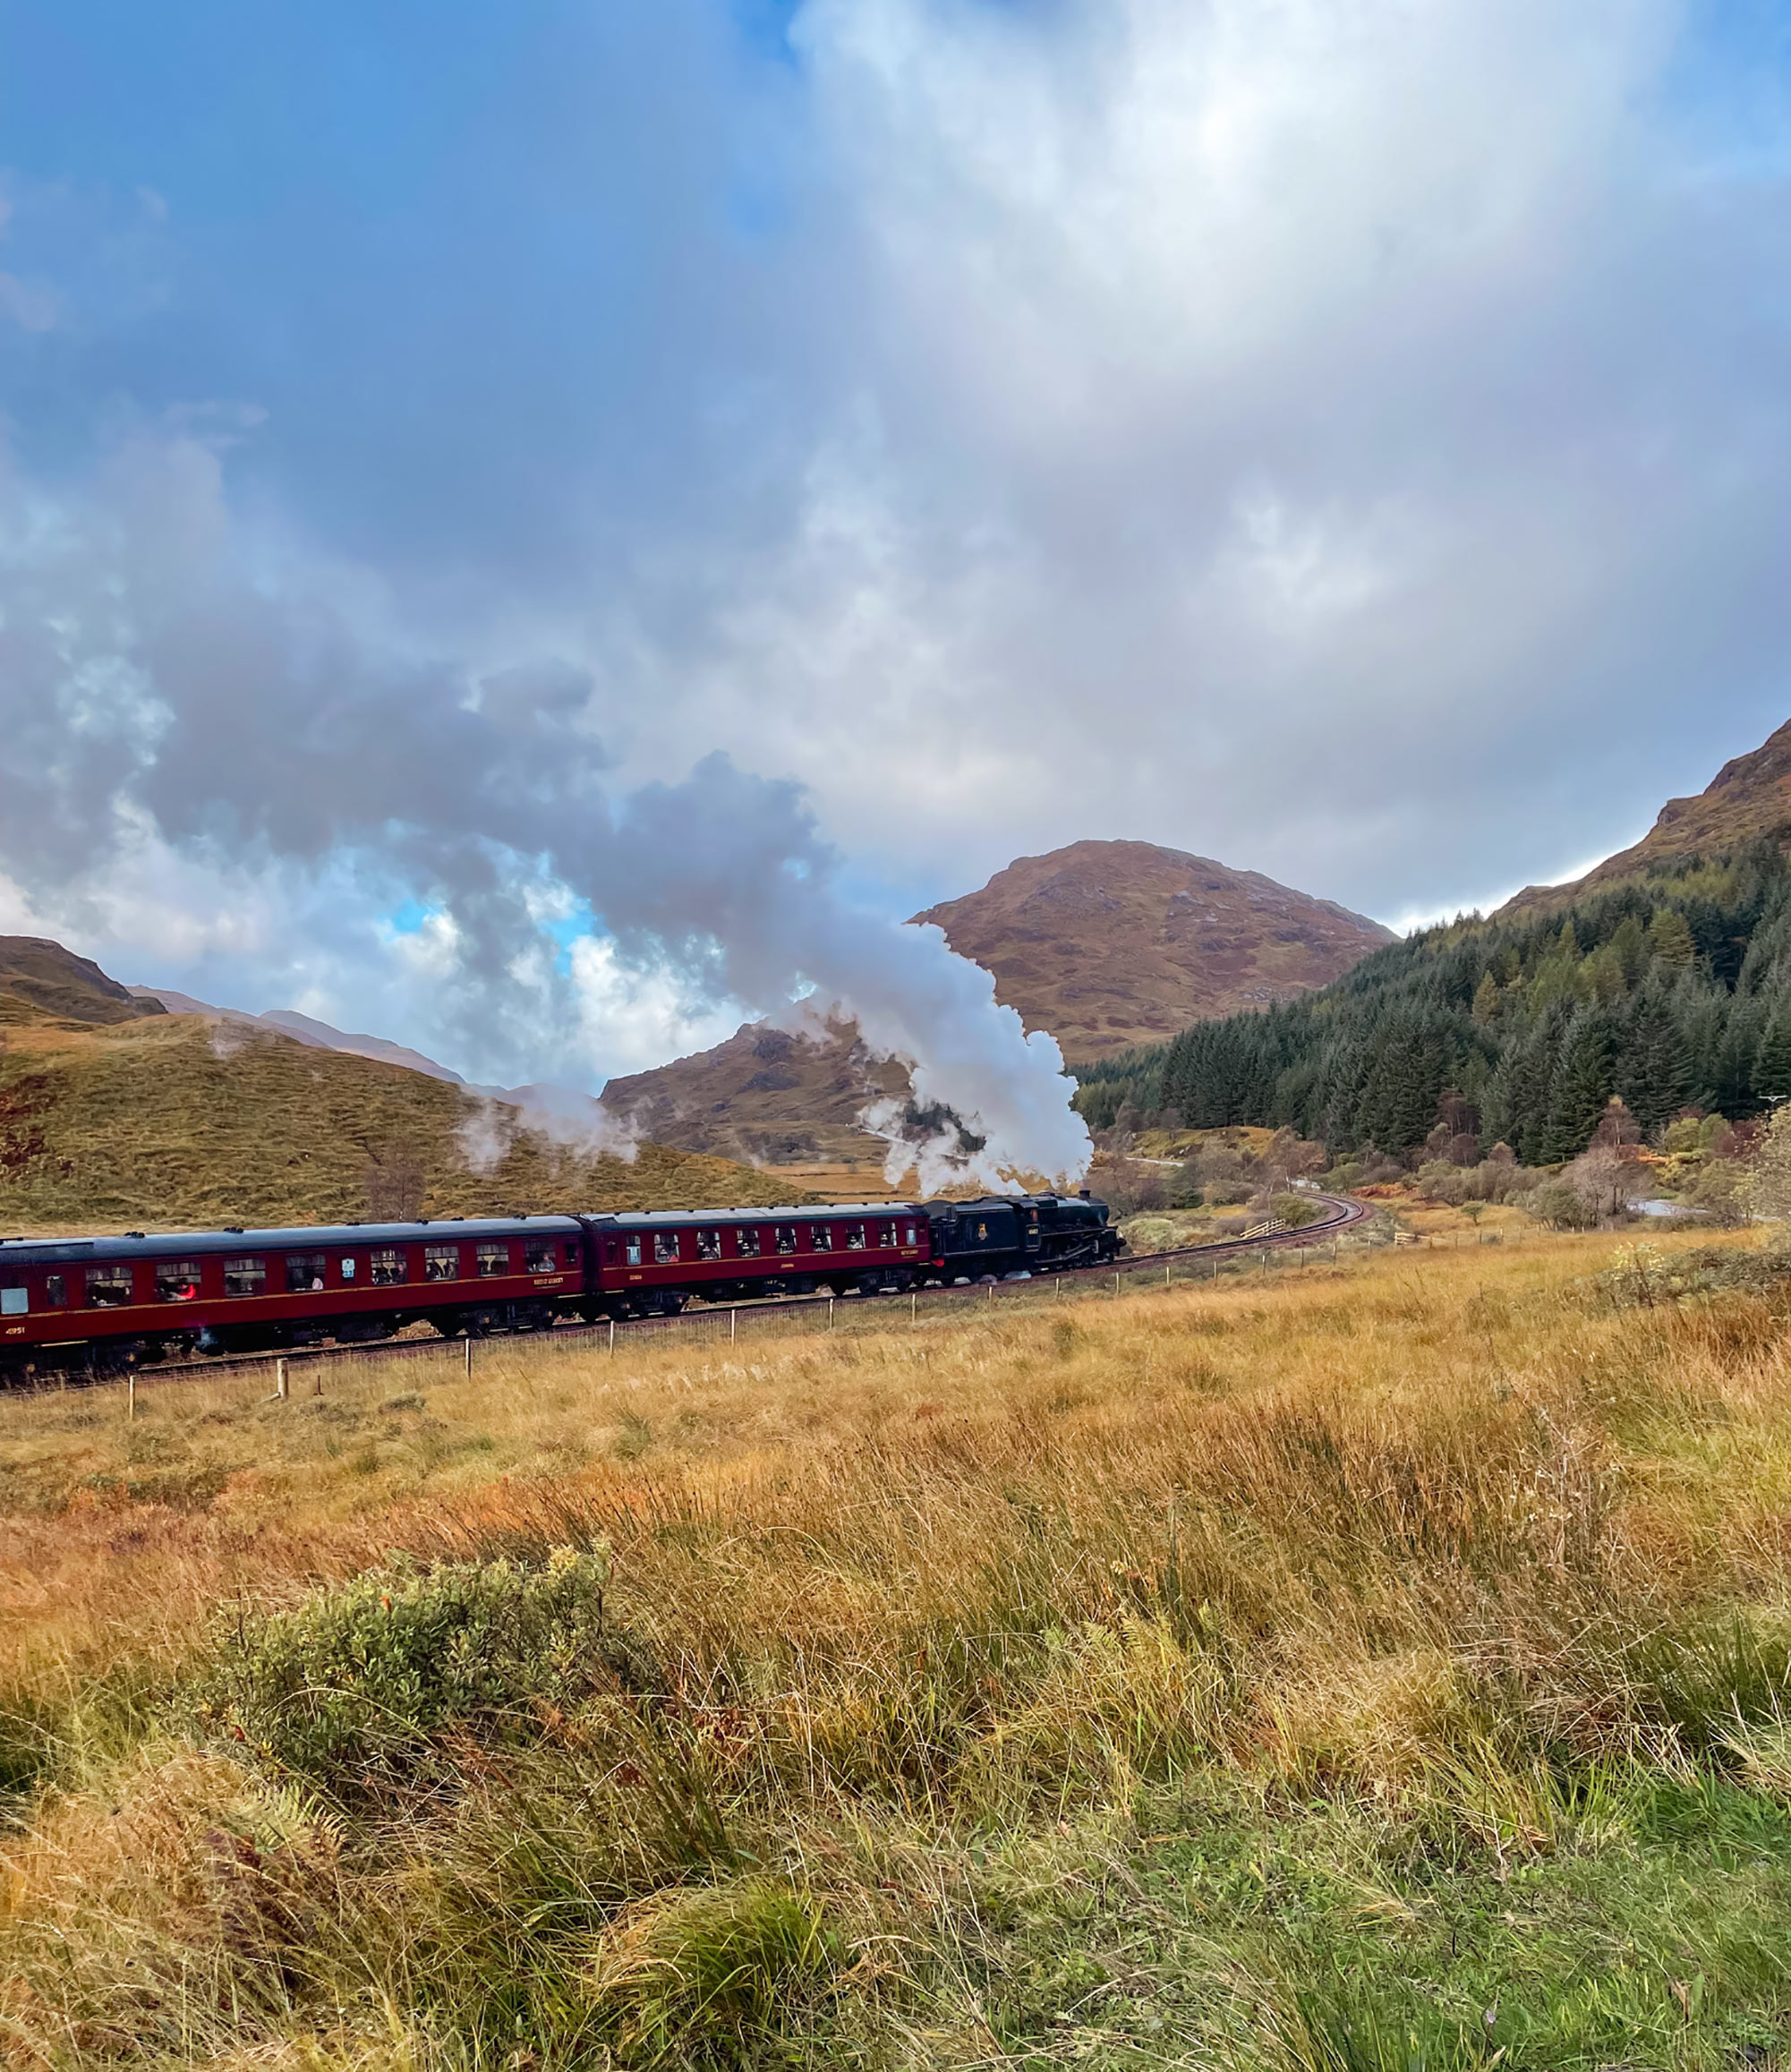 The Harry Potter train / Jacobite steam train